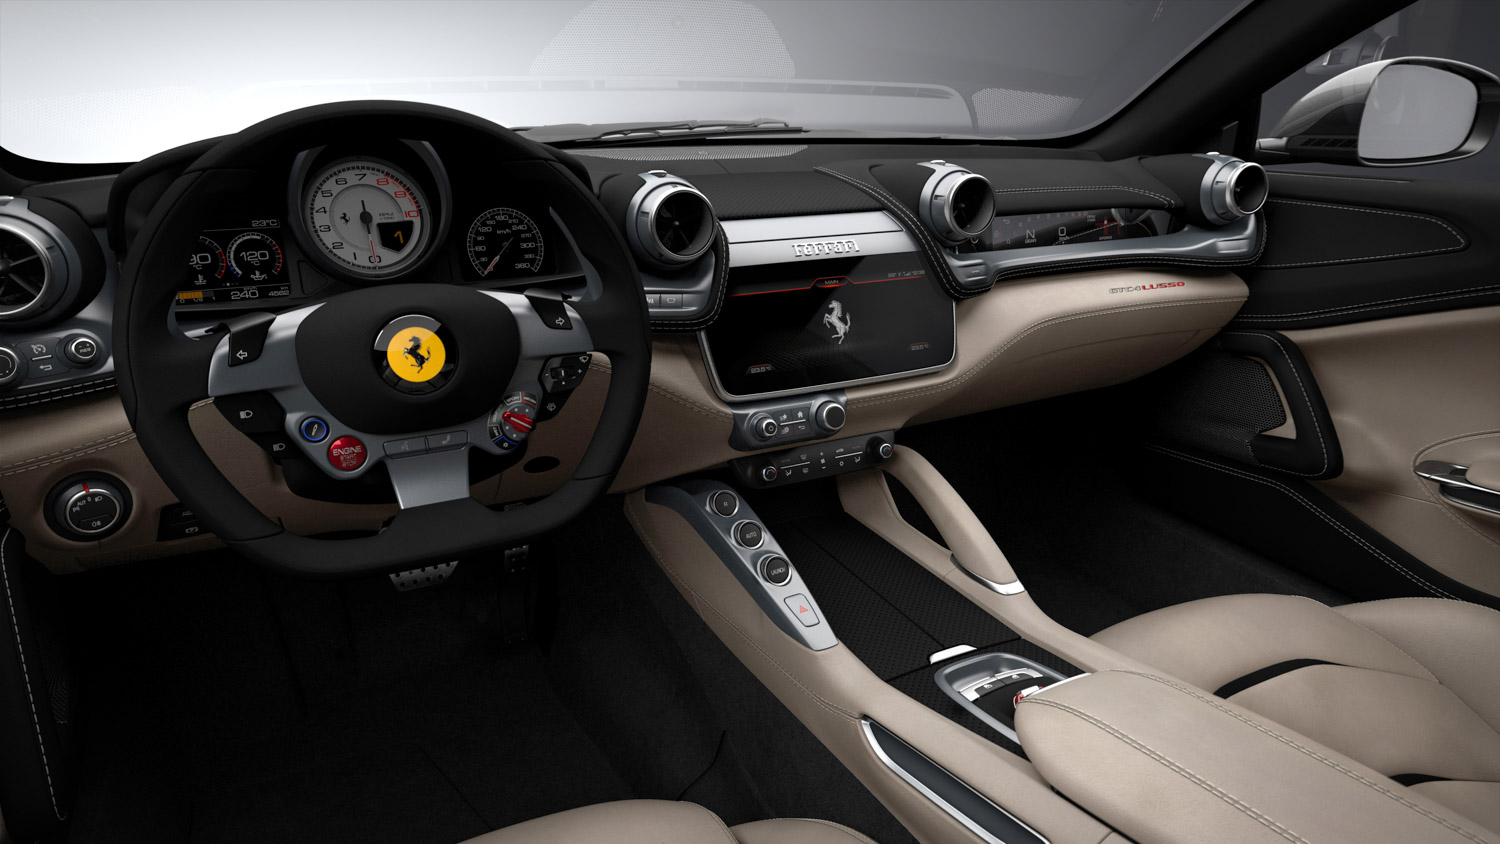 Ferrari_GTC4Lusso_interior_driver_s_side_300dpi.jpg